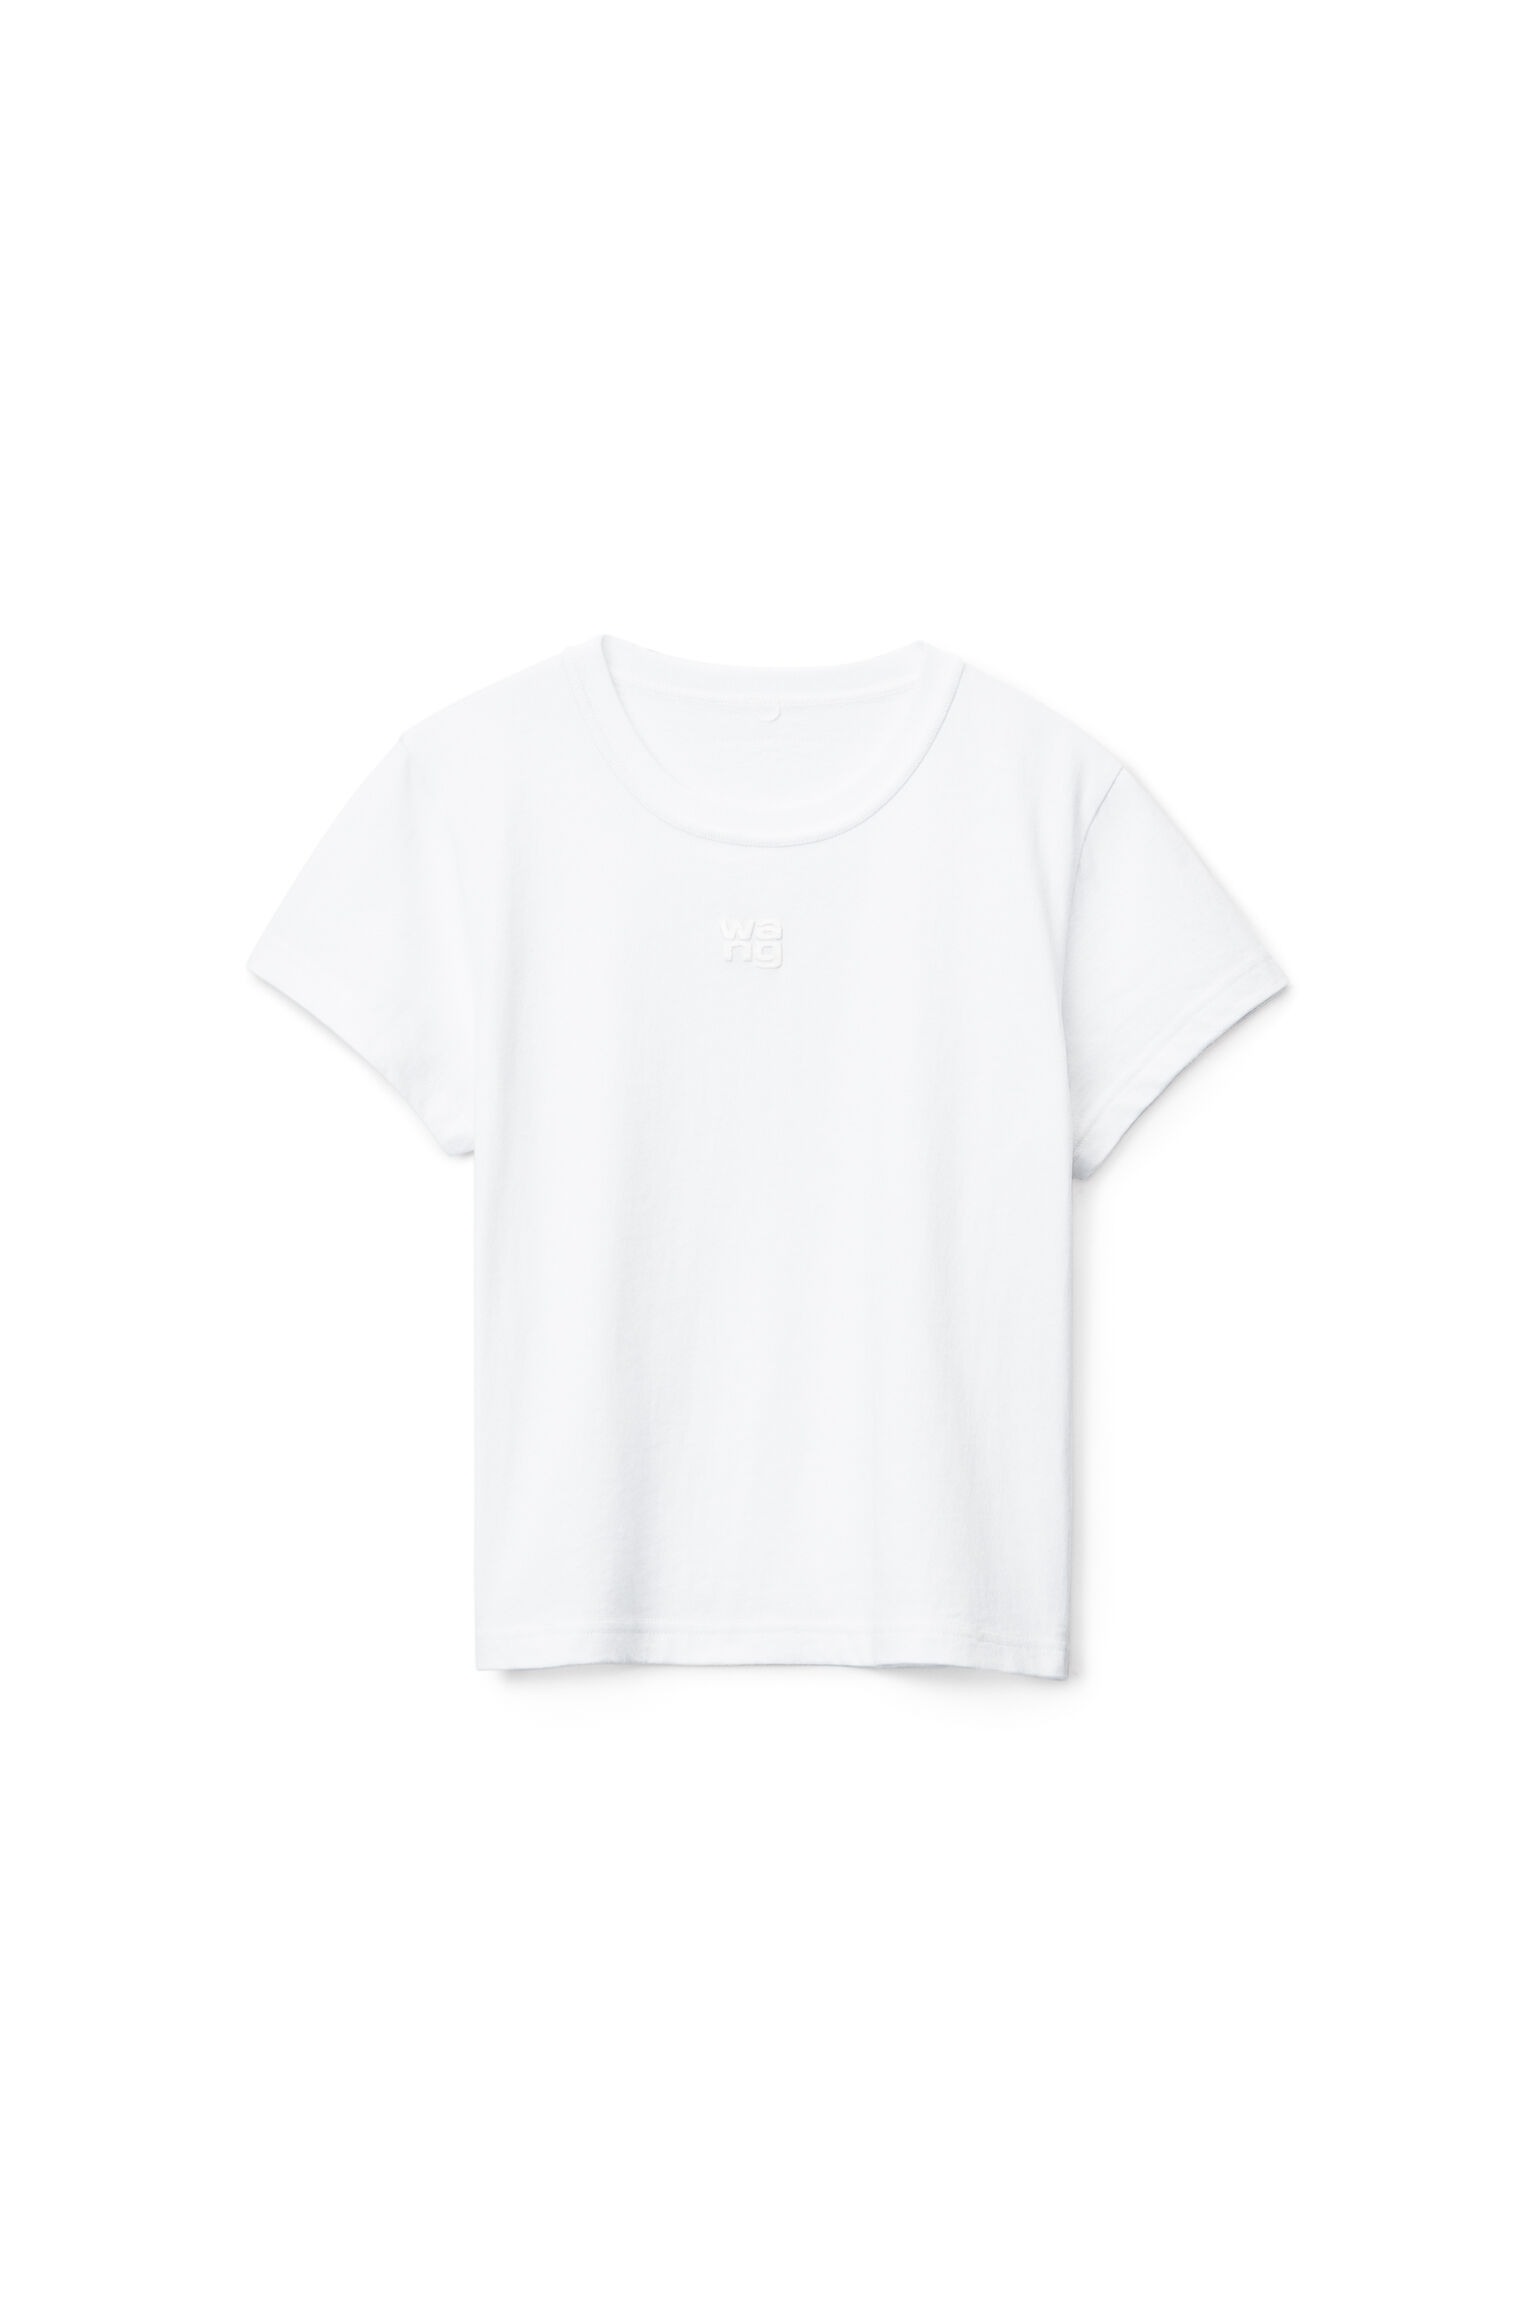 Unisex Sourcreme T-Shirt—White